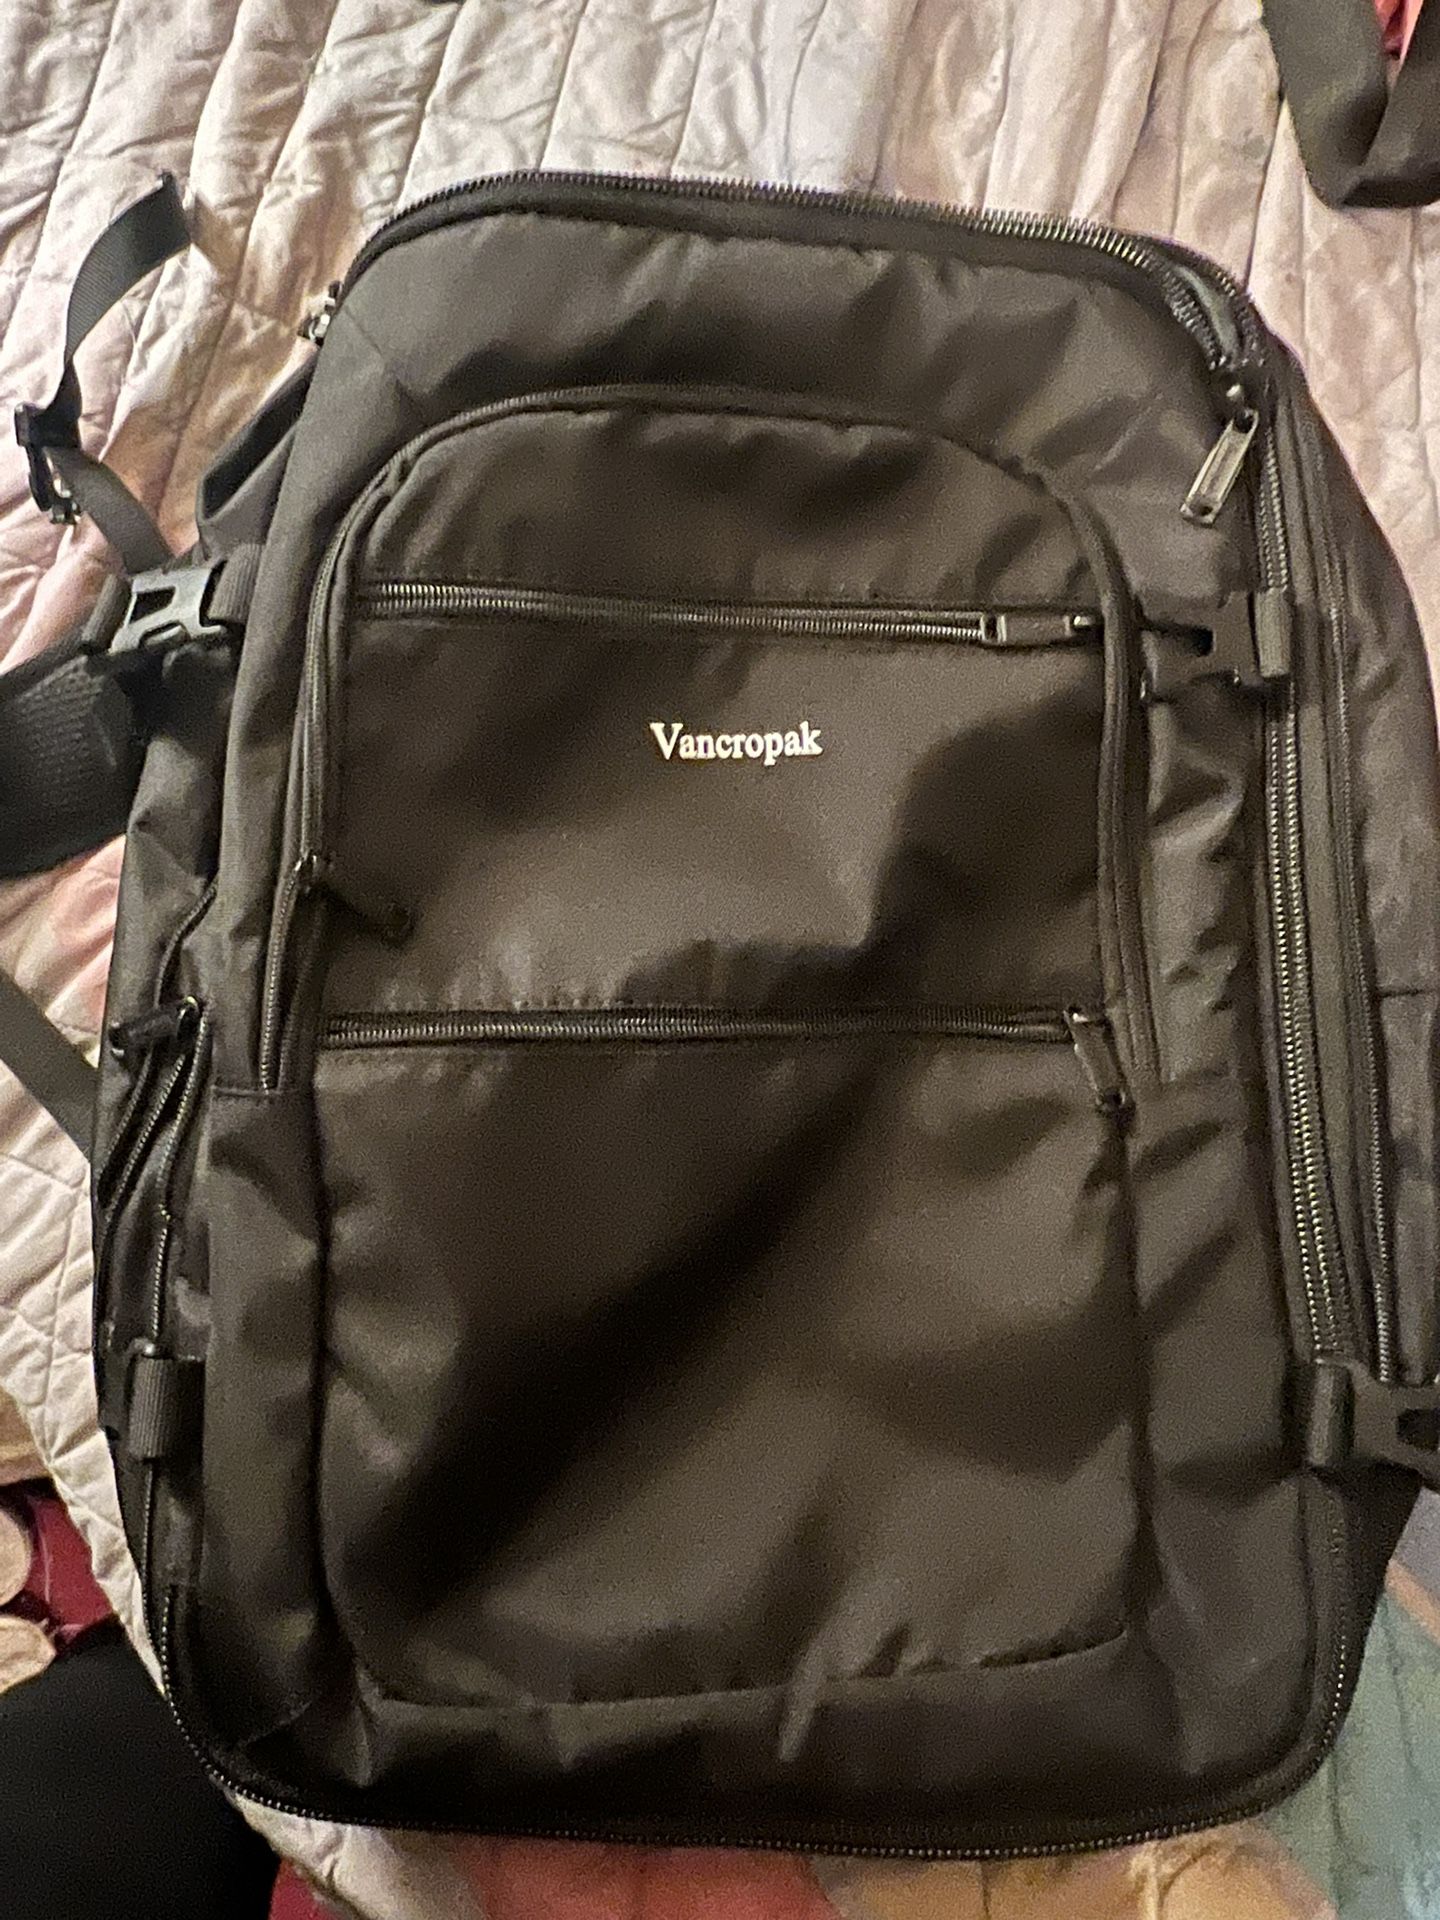 Travel Backpack $20